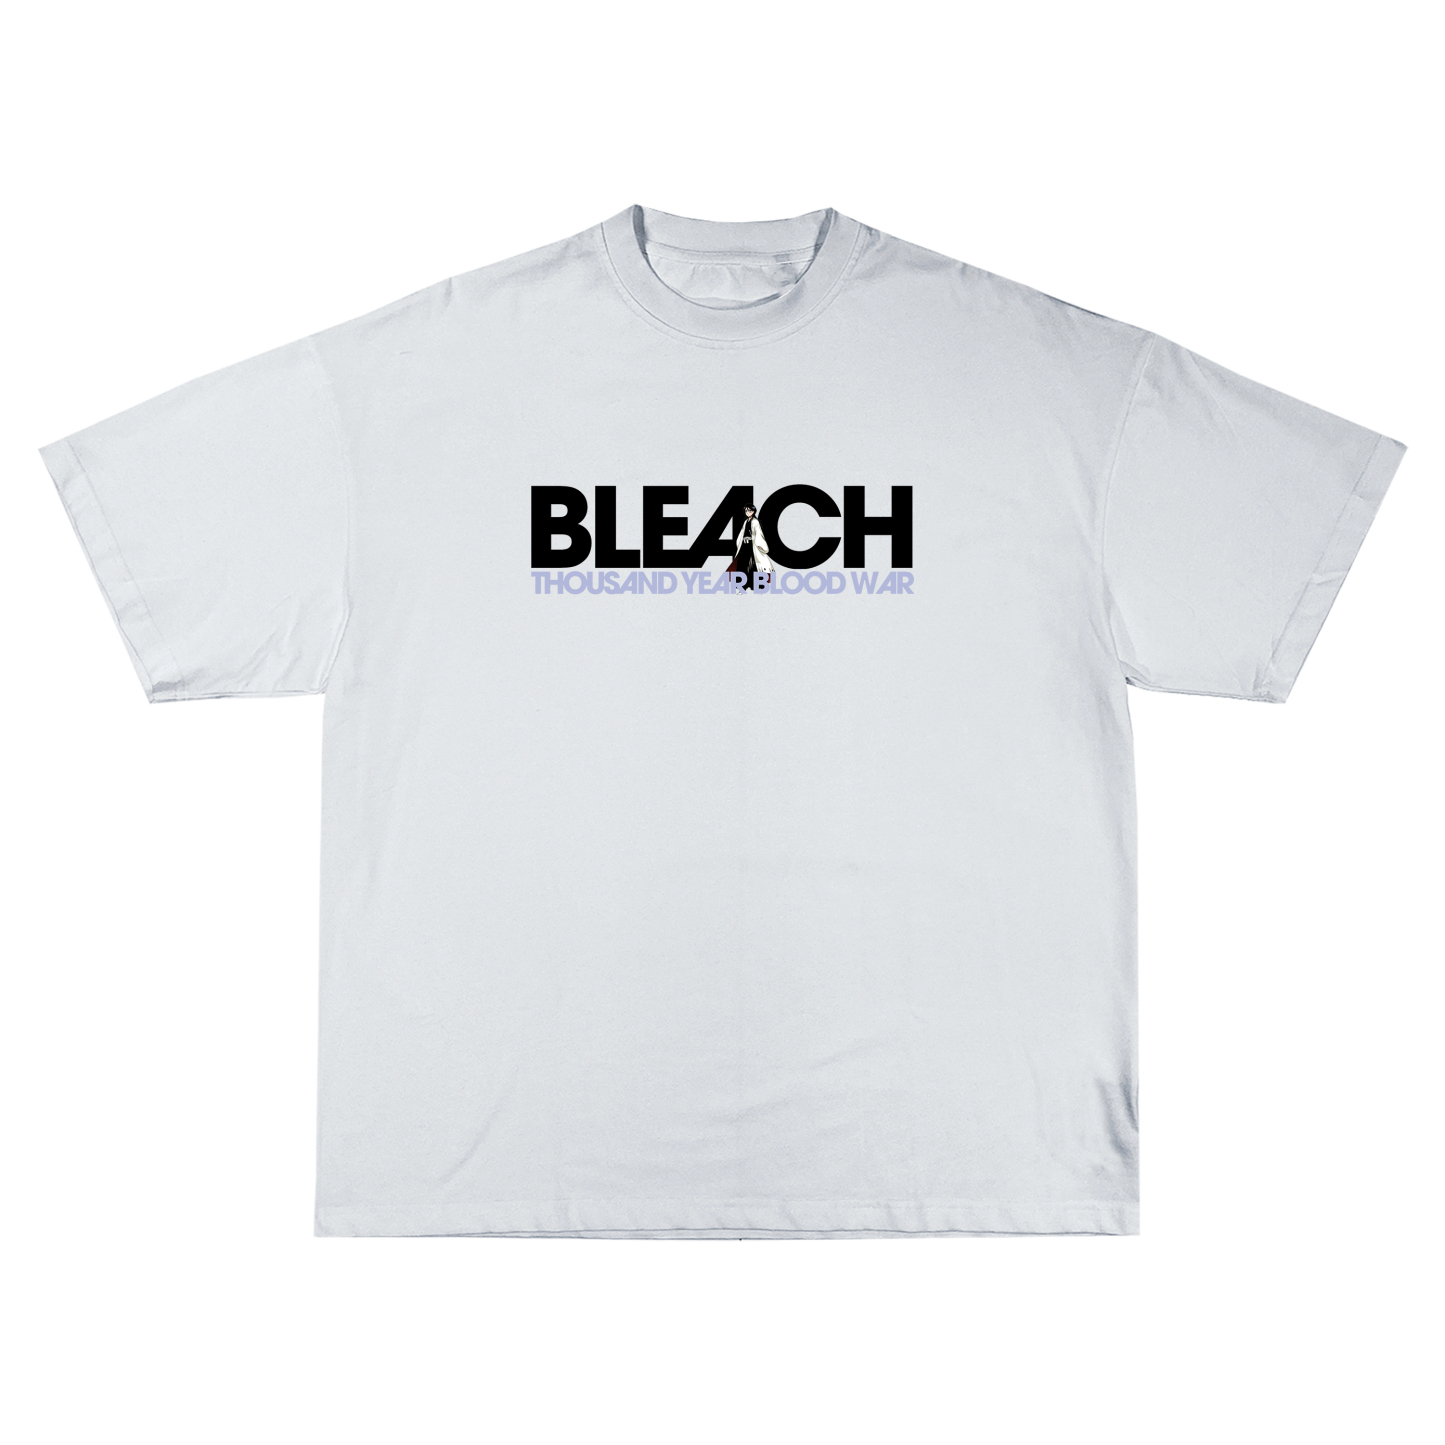 Rukia Kuchiki Bleach | White T-Shirt